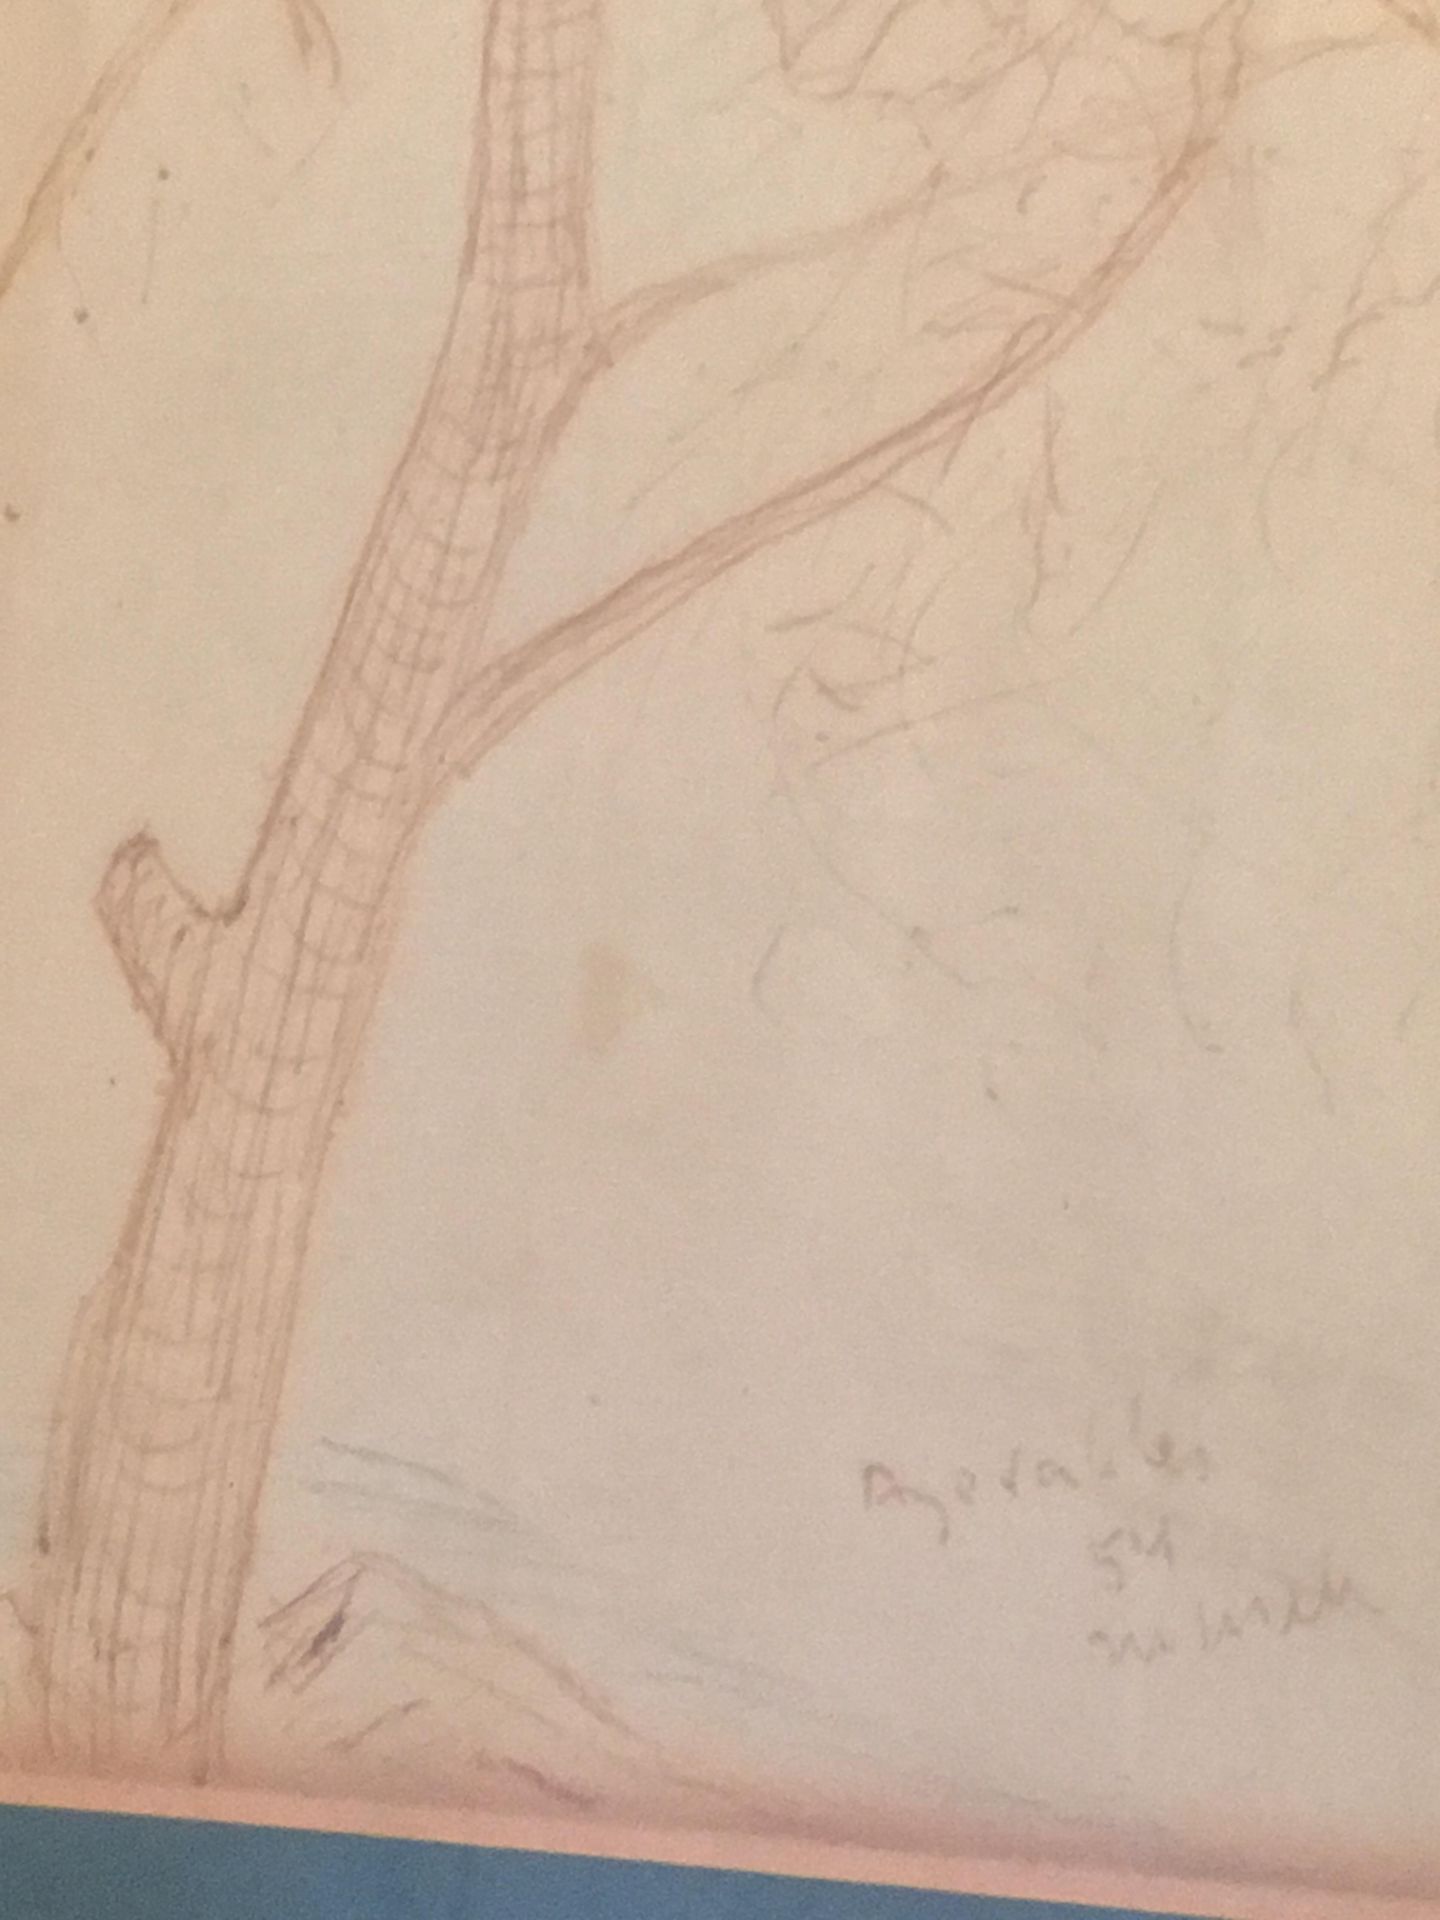 Tree sketch, Ink, signed by Marek Szwarc, 1954 - Image 2 of 3